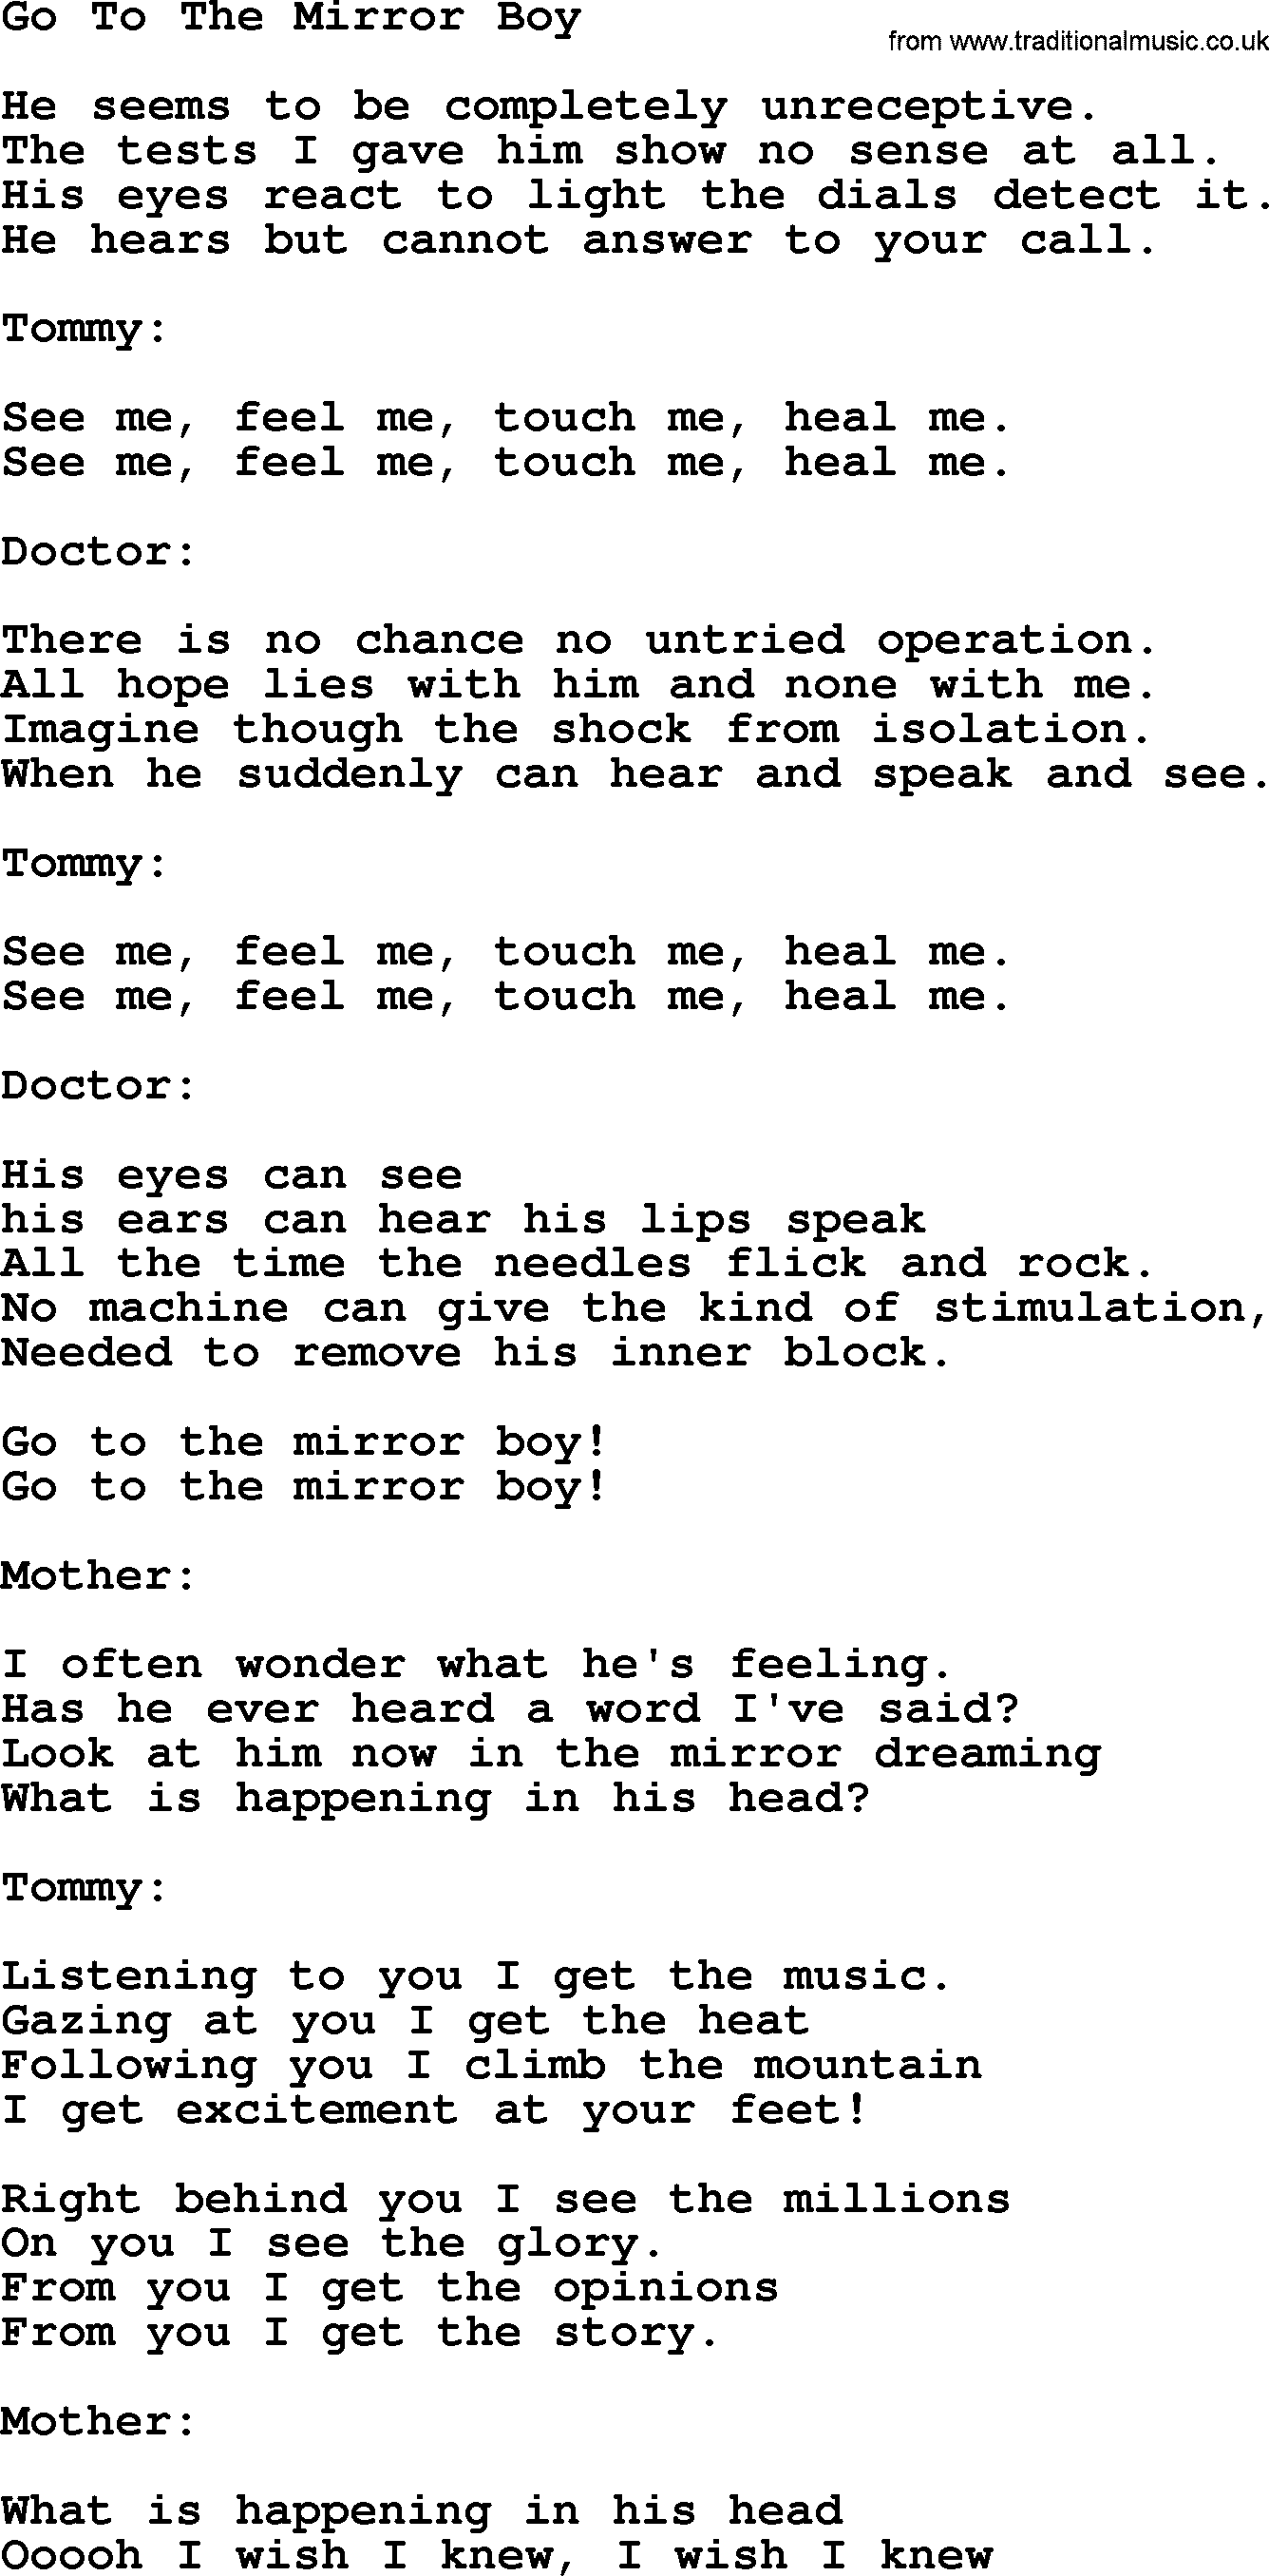 The Byrds song Go To The Mirror Boy, lyrics